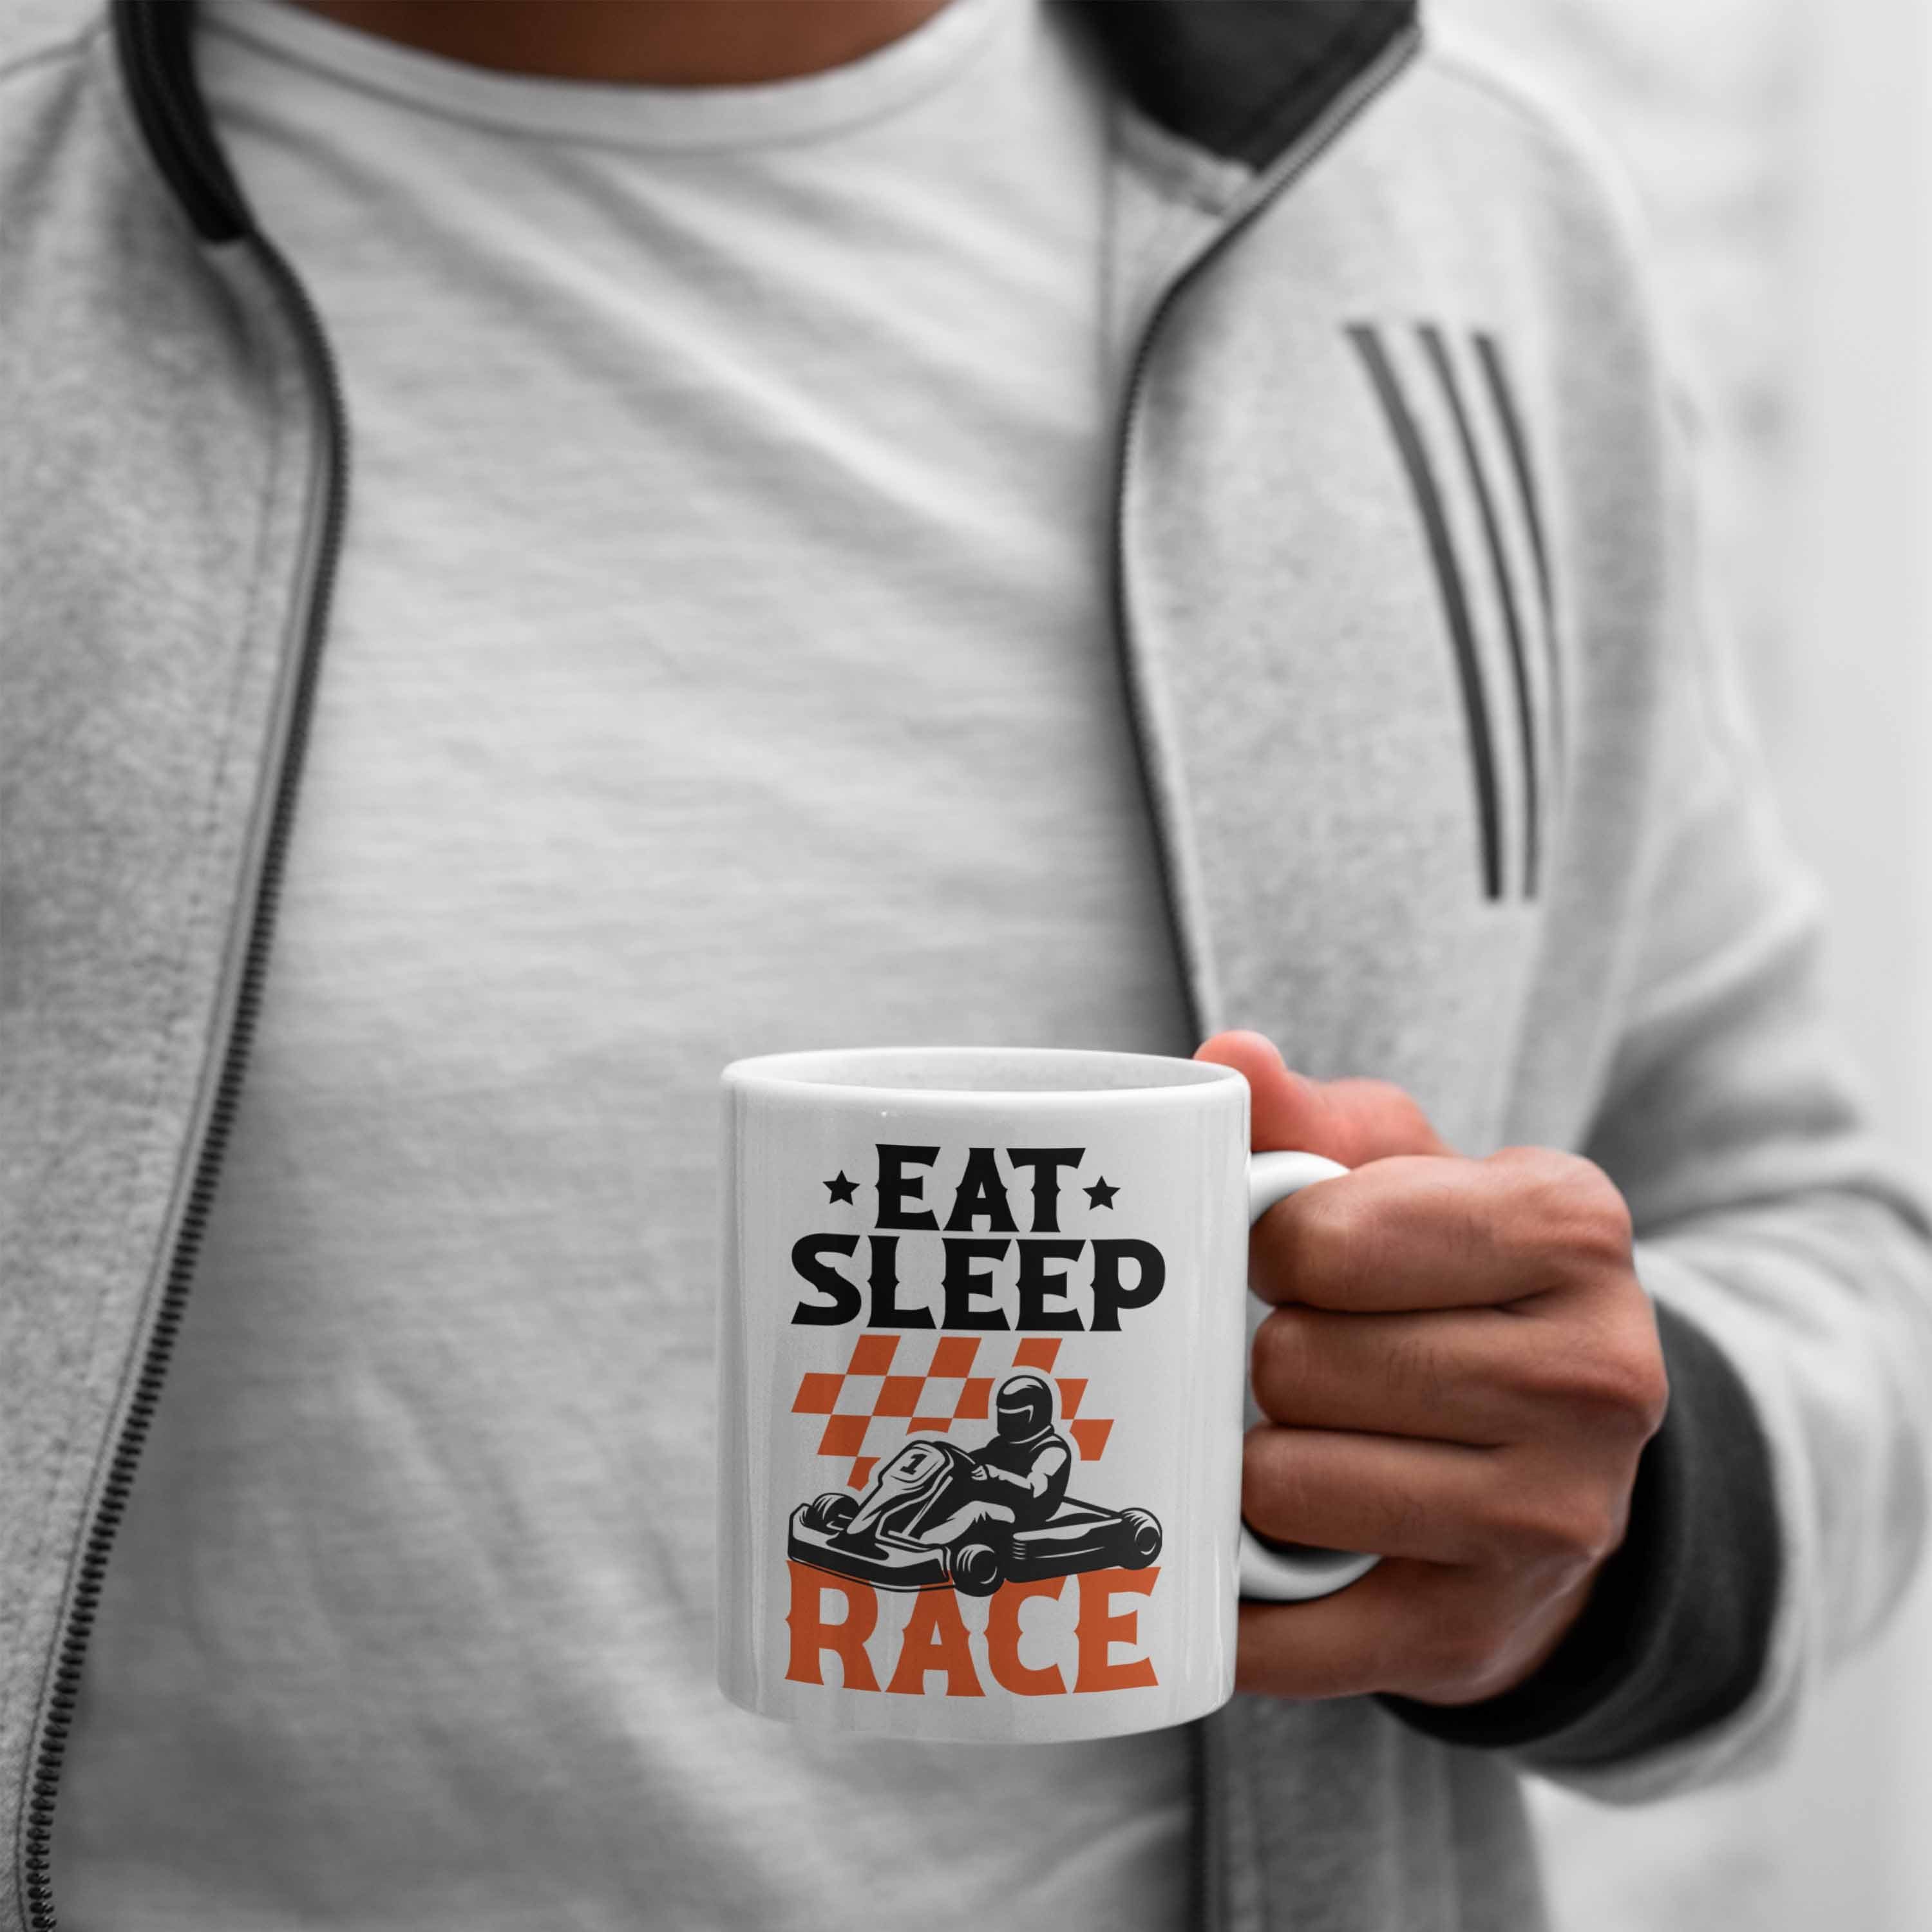 Kart Gokart Racing Tasse - Go Trendation Fahrer Race Eat Sleep Rennfahrer Tasse Trendation Geschenk Weiss